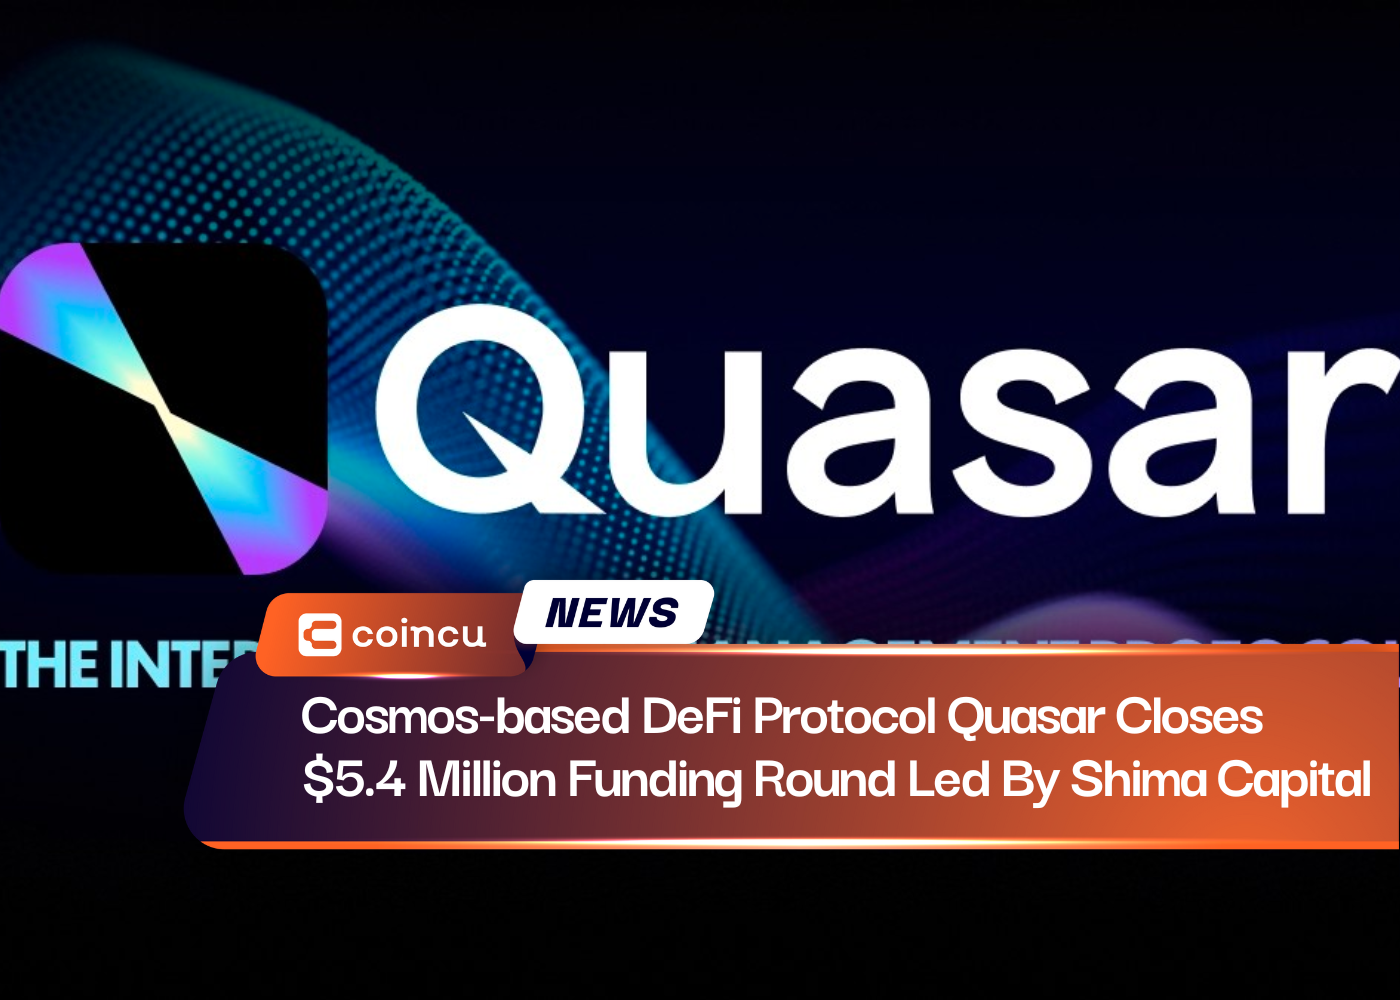 Cosmos-based DeFi Protocol Quasar Closes $5.4 Million Funding Round Led By Shima Capital